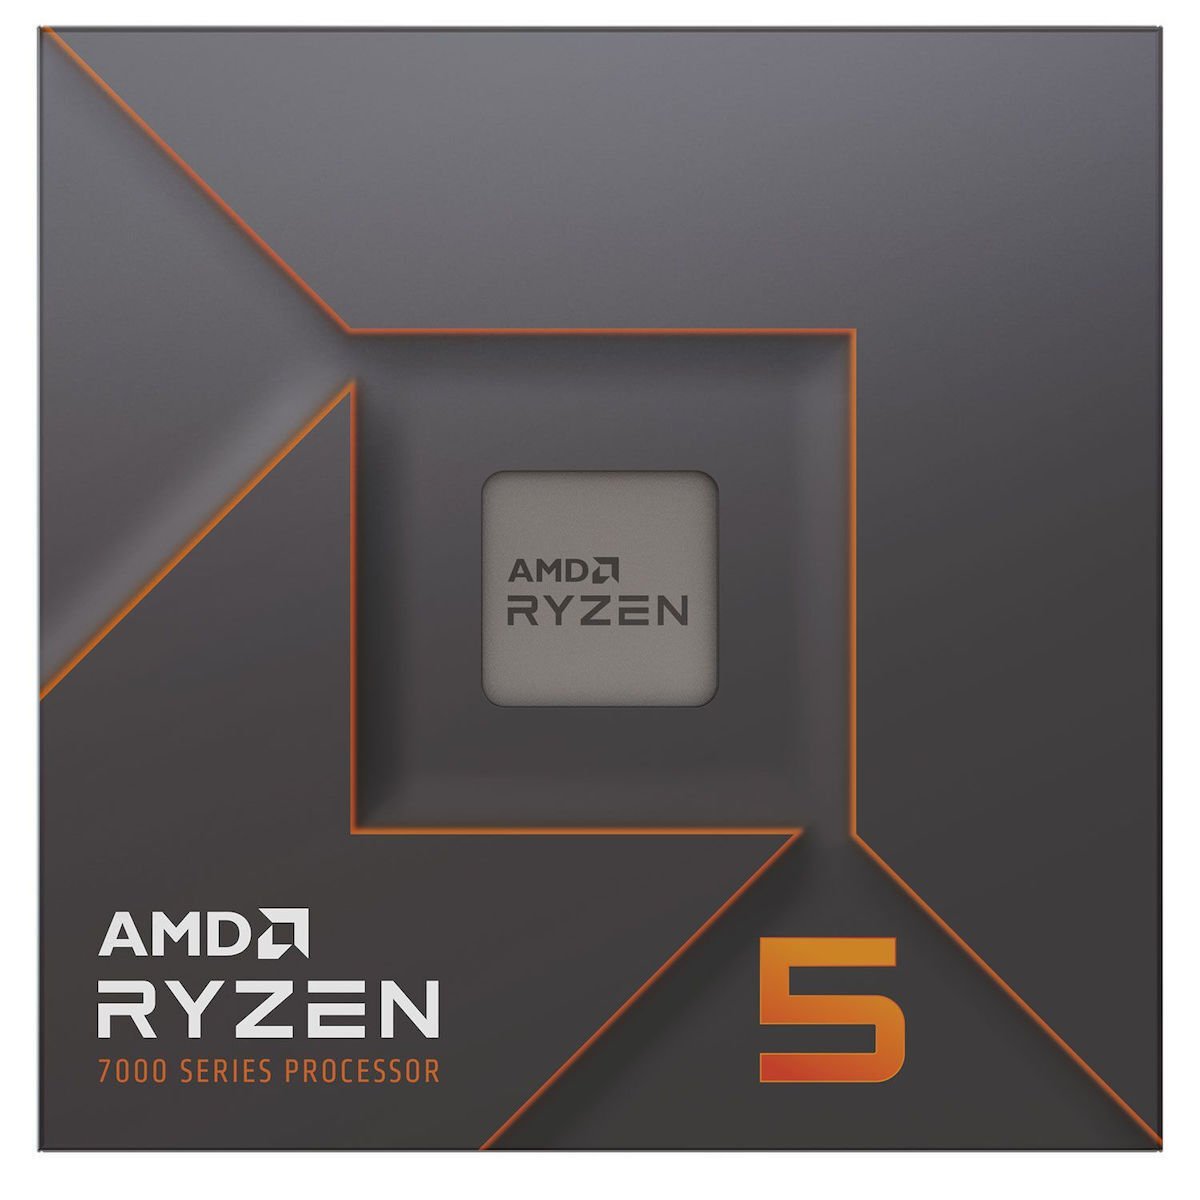 More information about "AMD Ryzen 5 7600X - MSI Pro B650M-A WiFi"